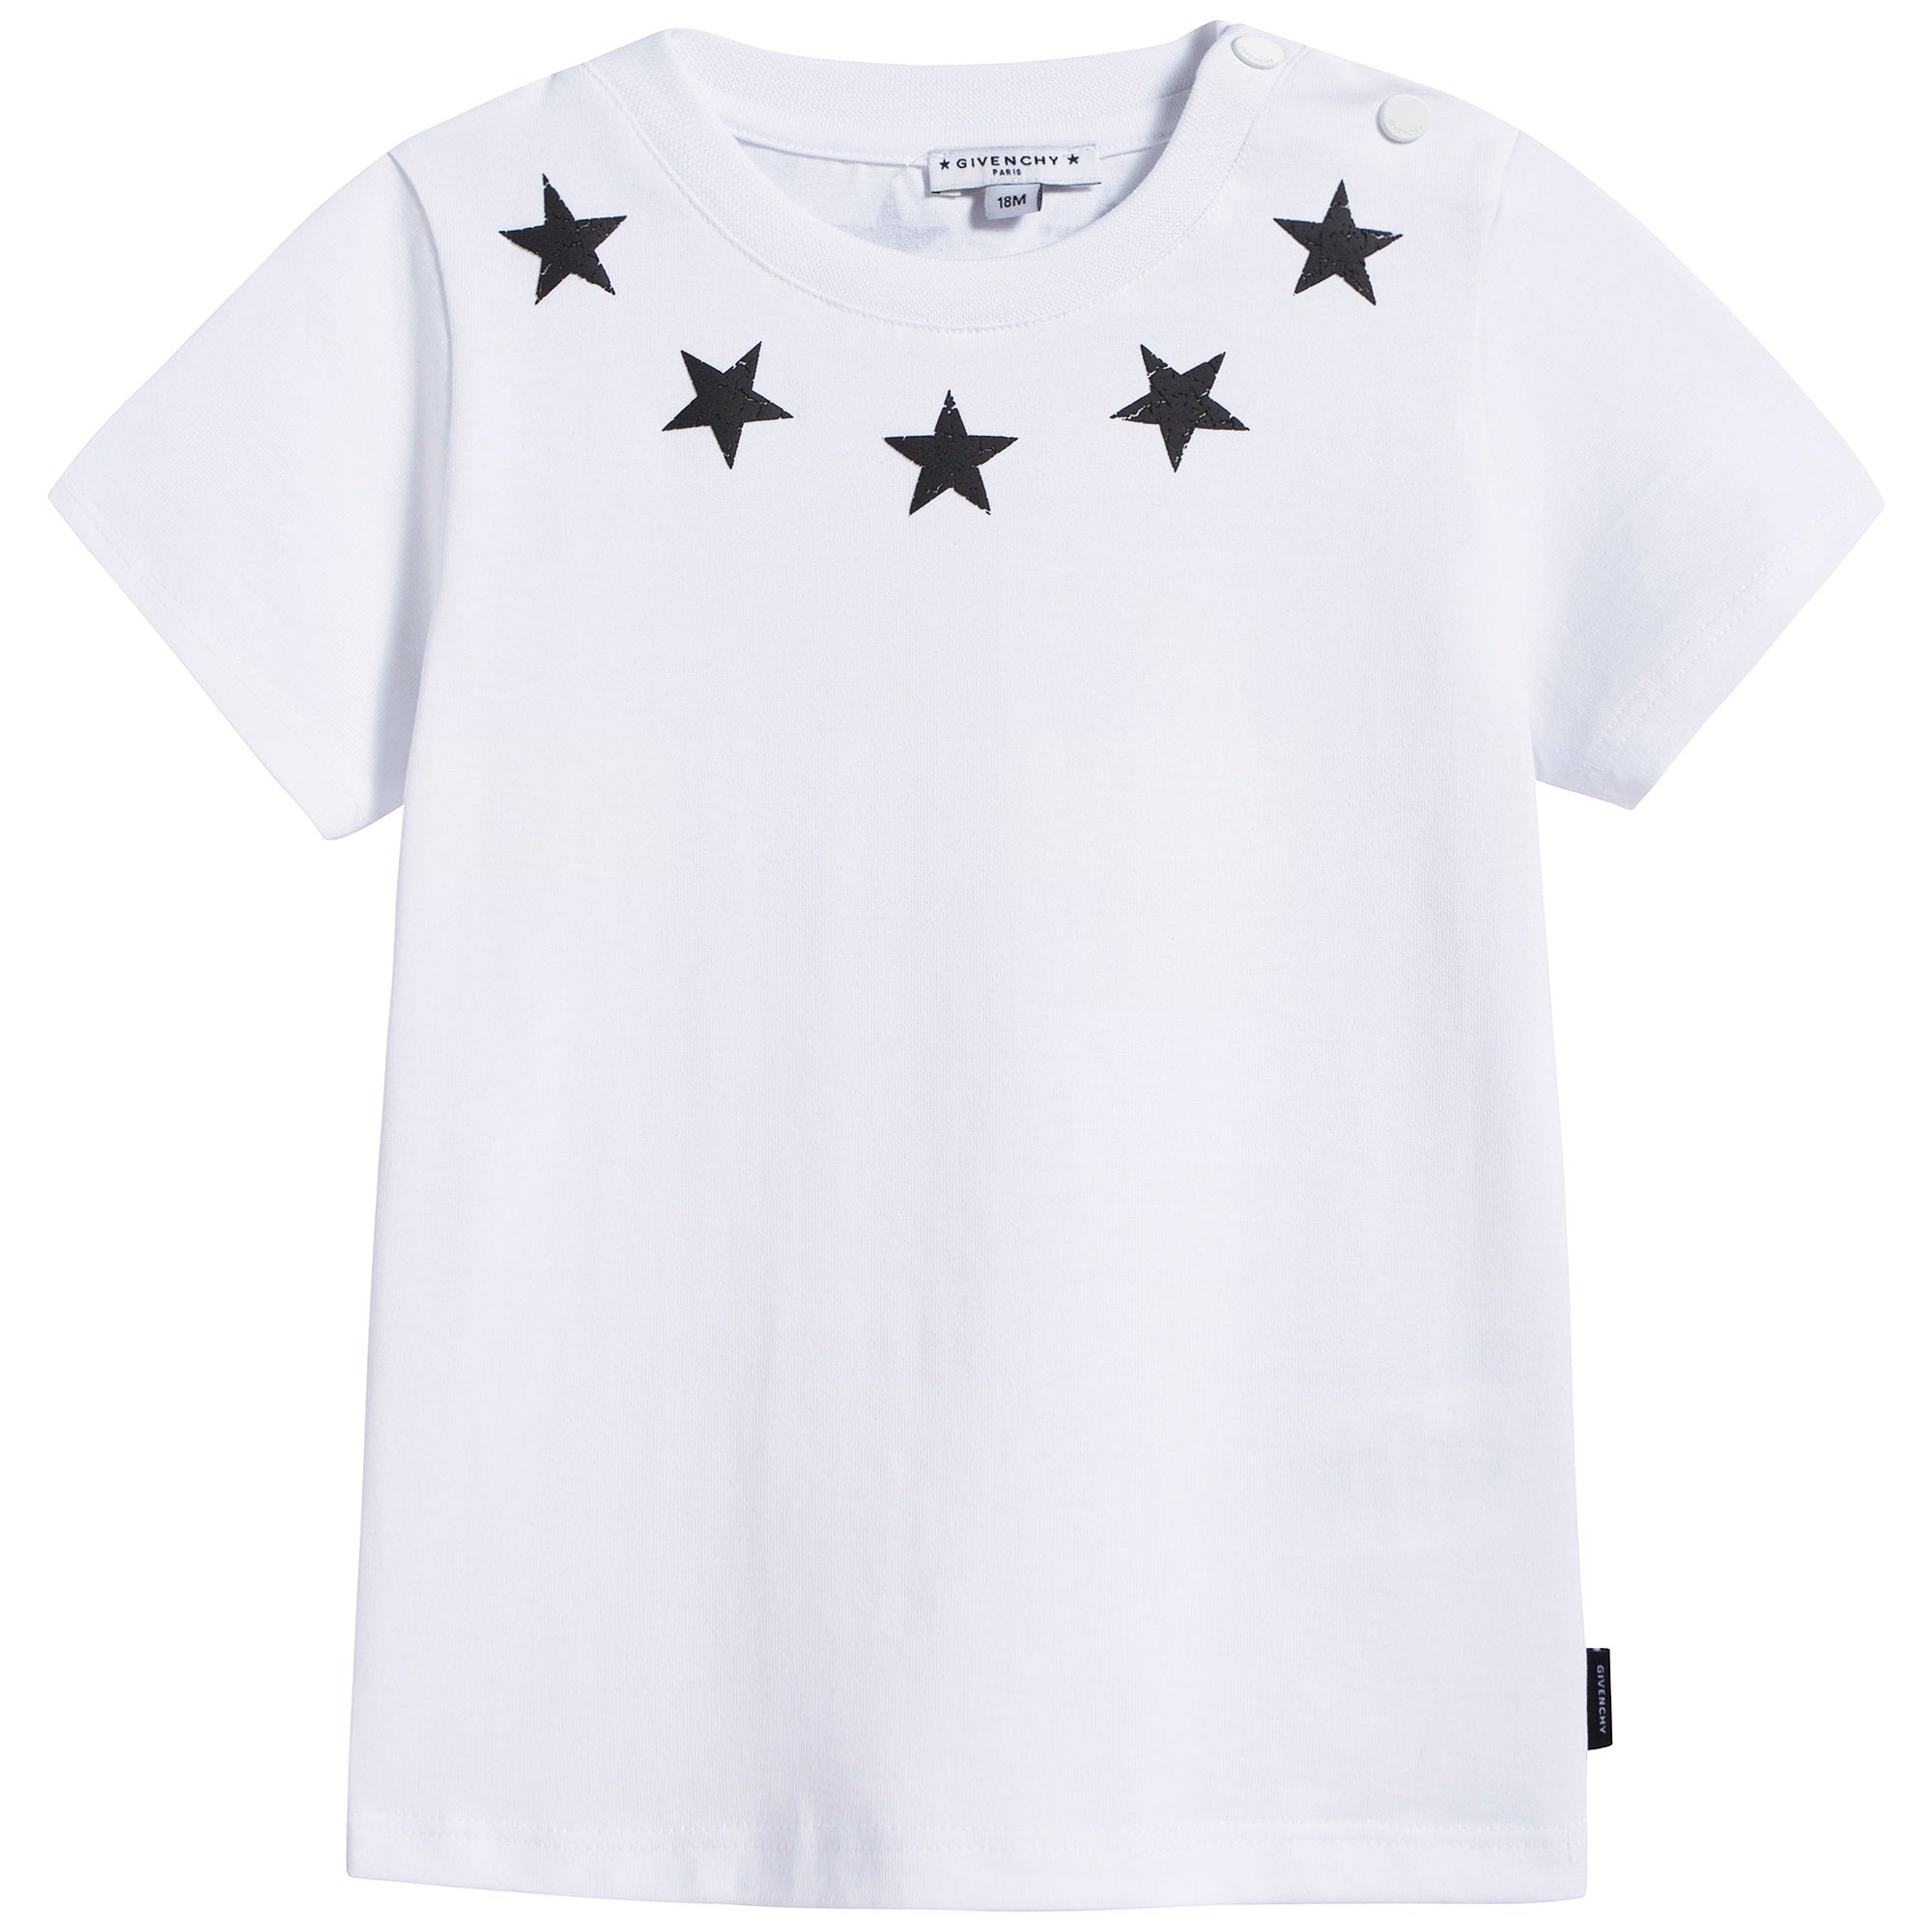 Baby Boys White Star Cotton T-shirt